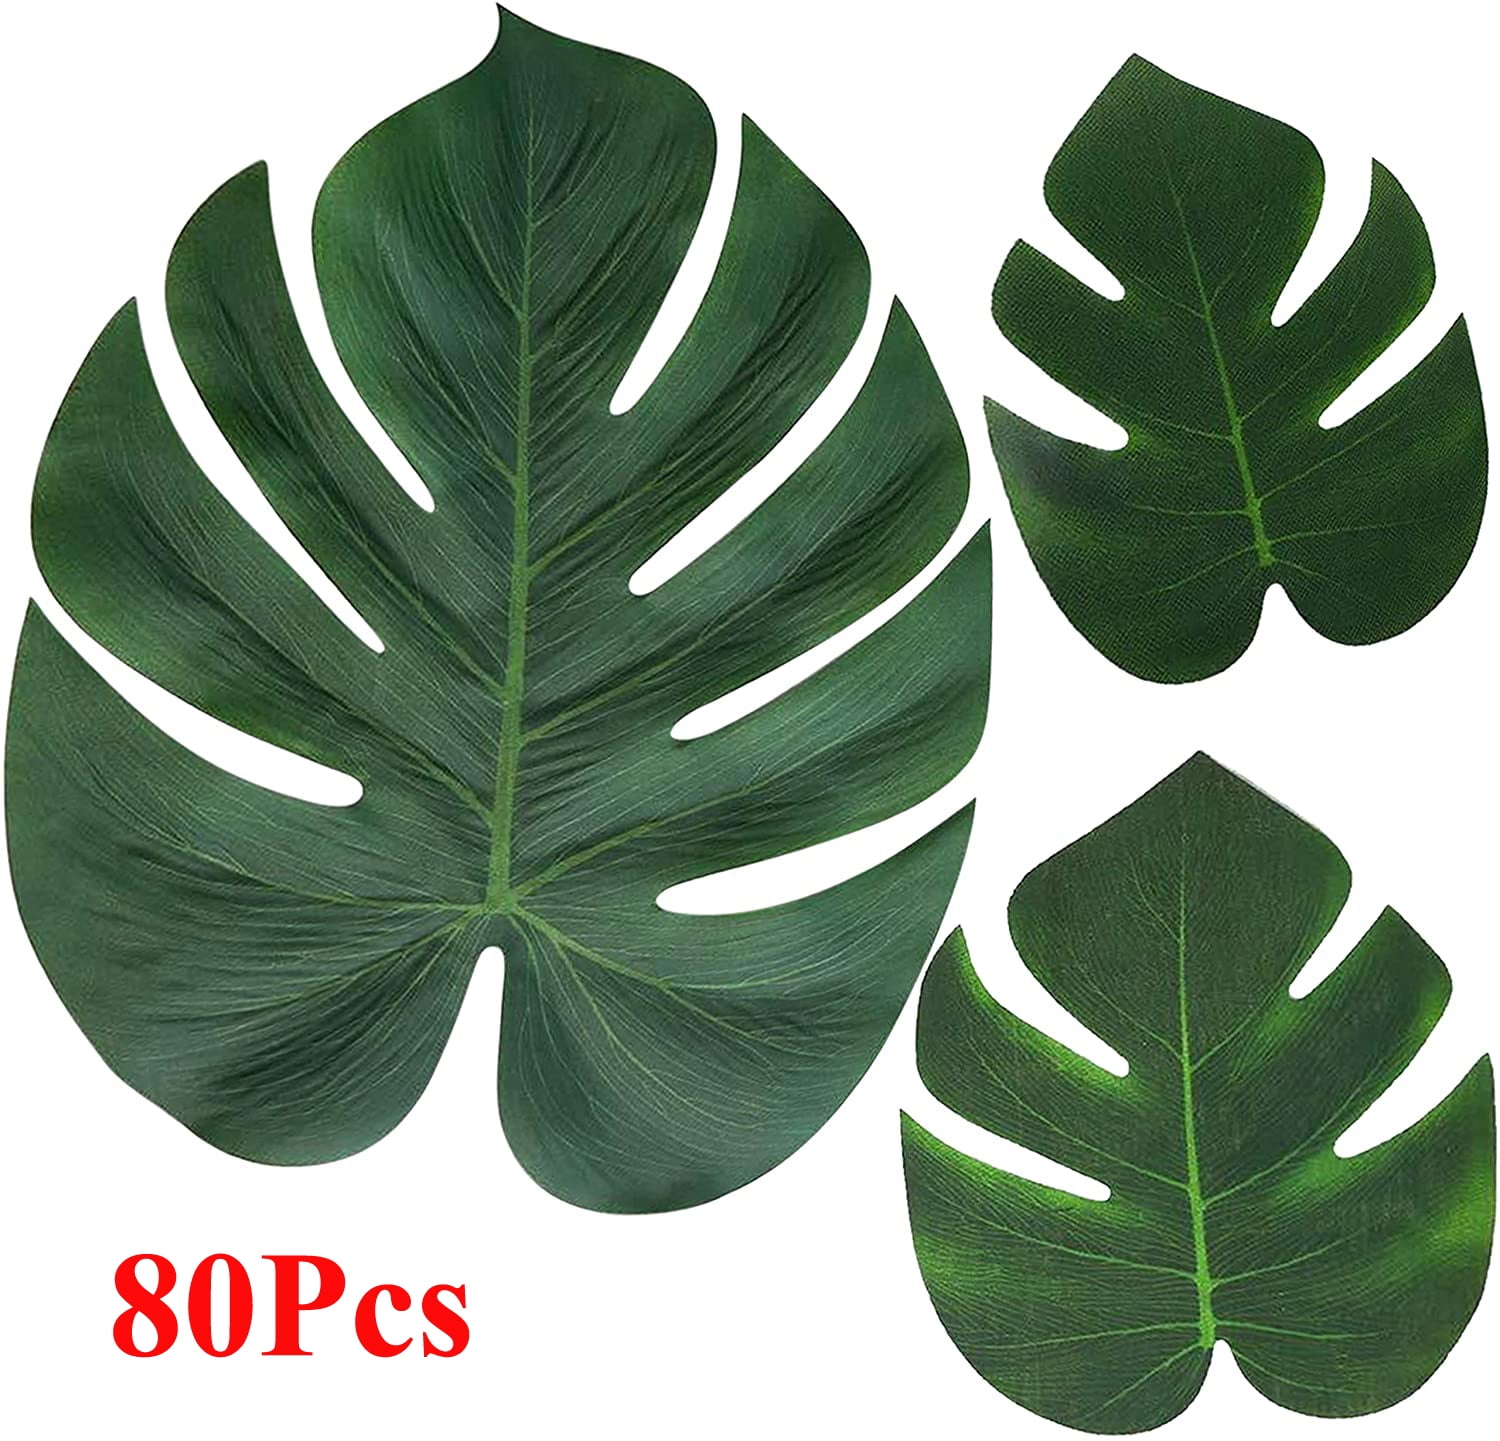 20pcs/100pcs New Artificial Silk Green Leaves Flower Leaf Wedding Party Decor 